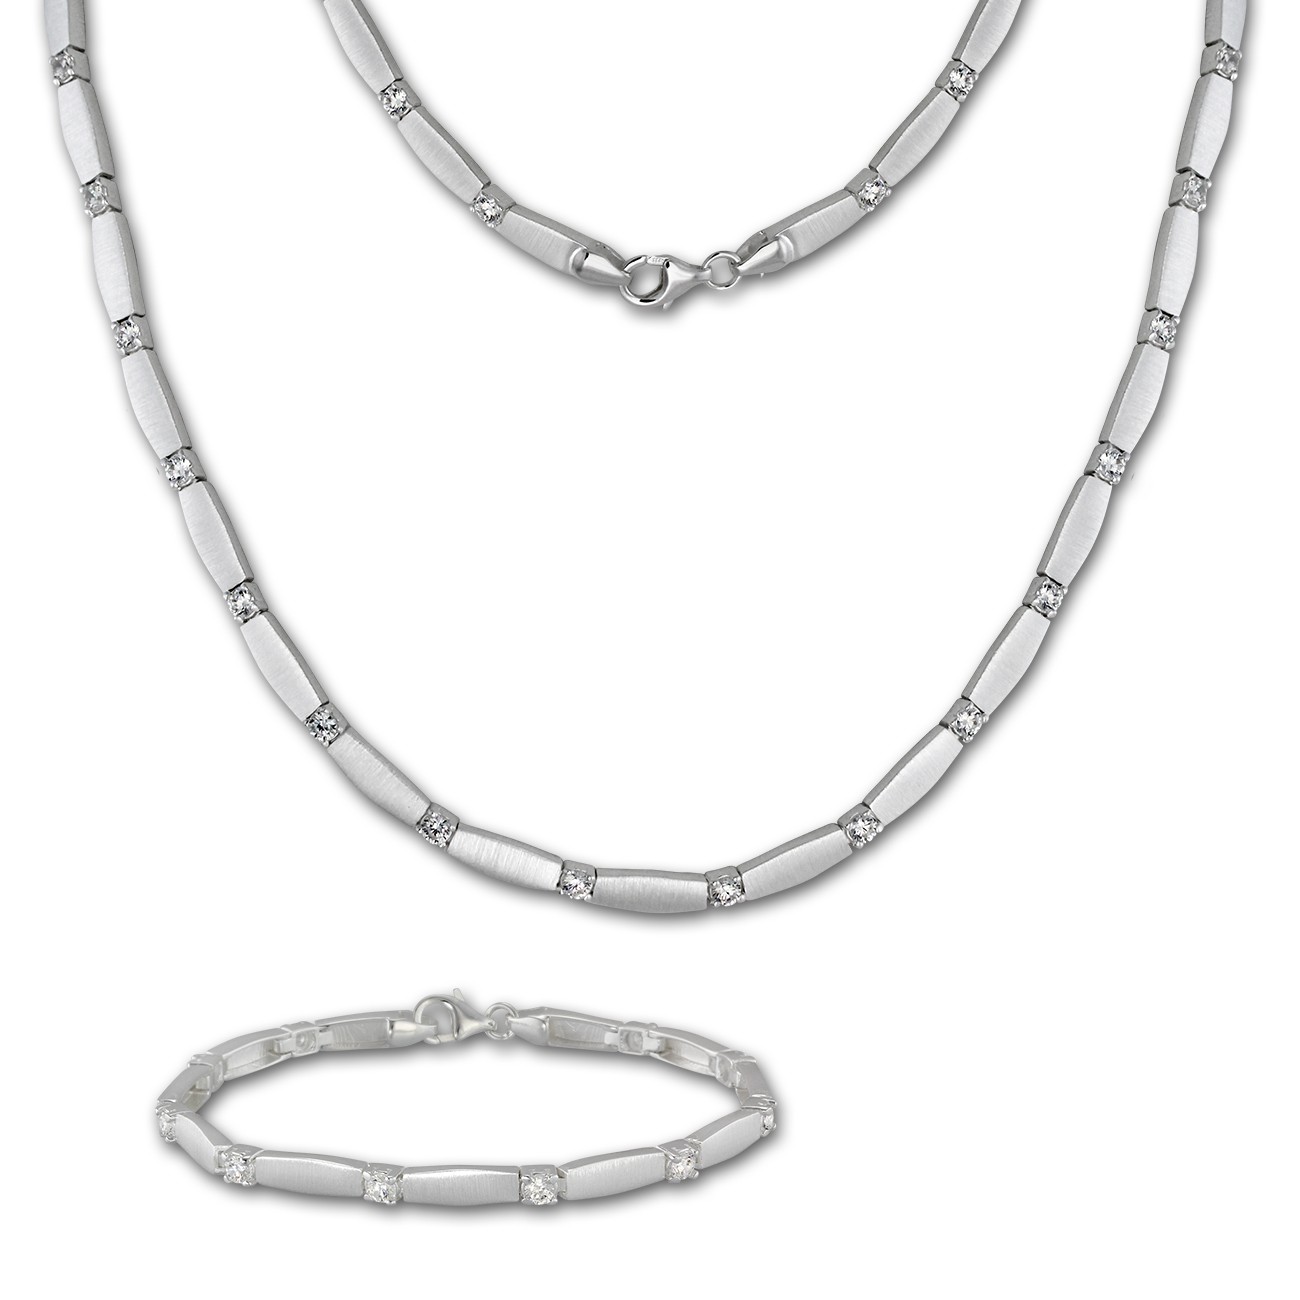 Edelstahl Collier Halskette Silber Poliert Matt Armband Kette Set Edel kürzbar